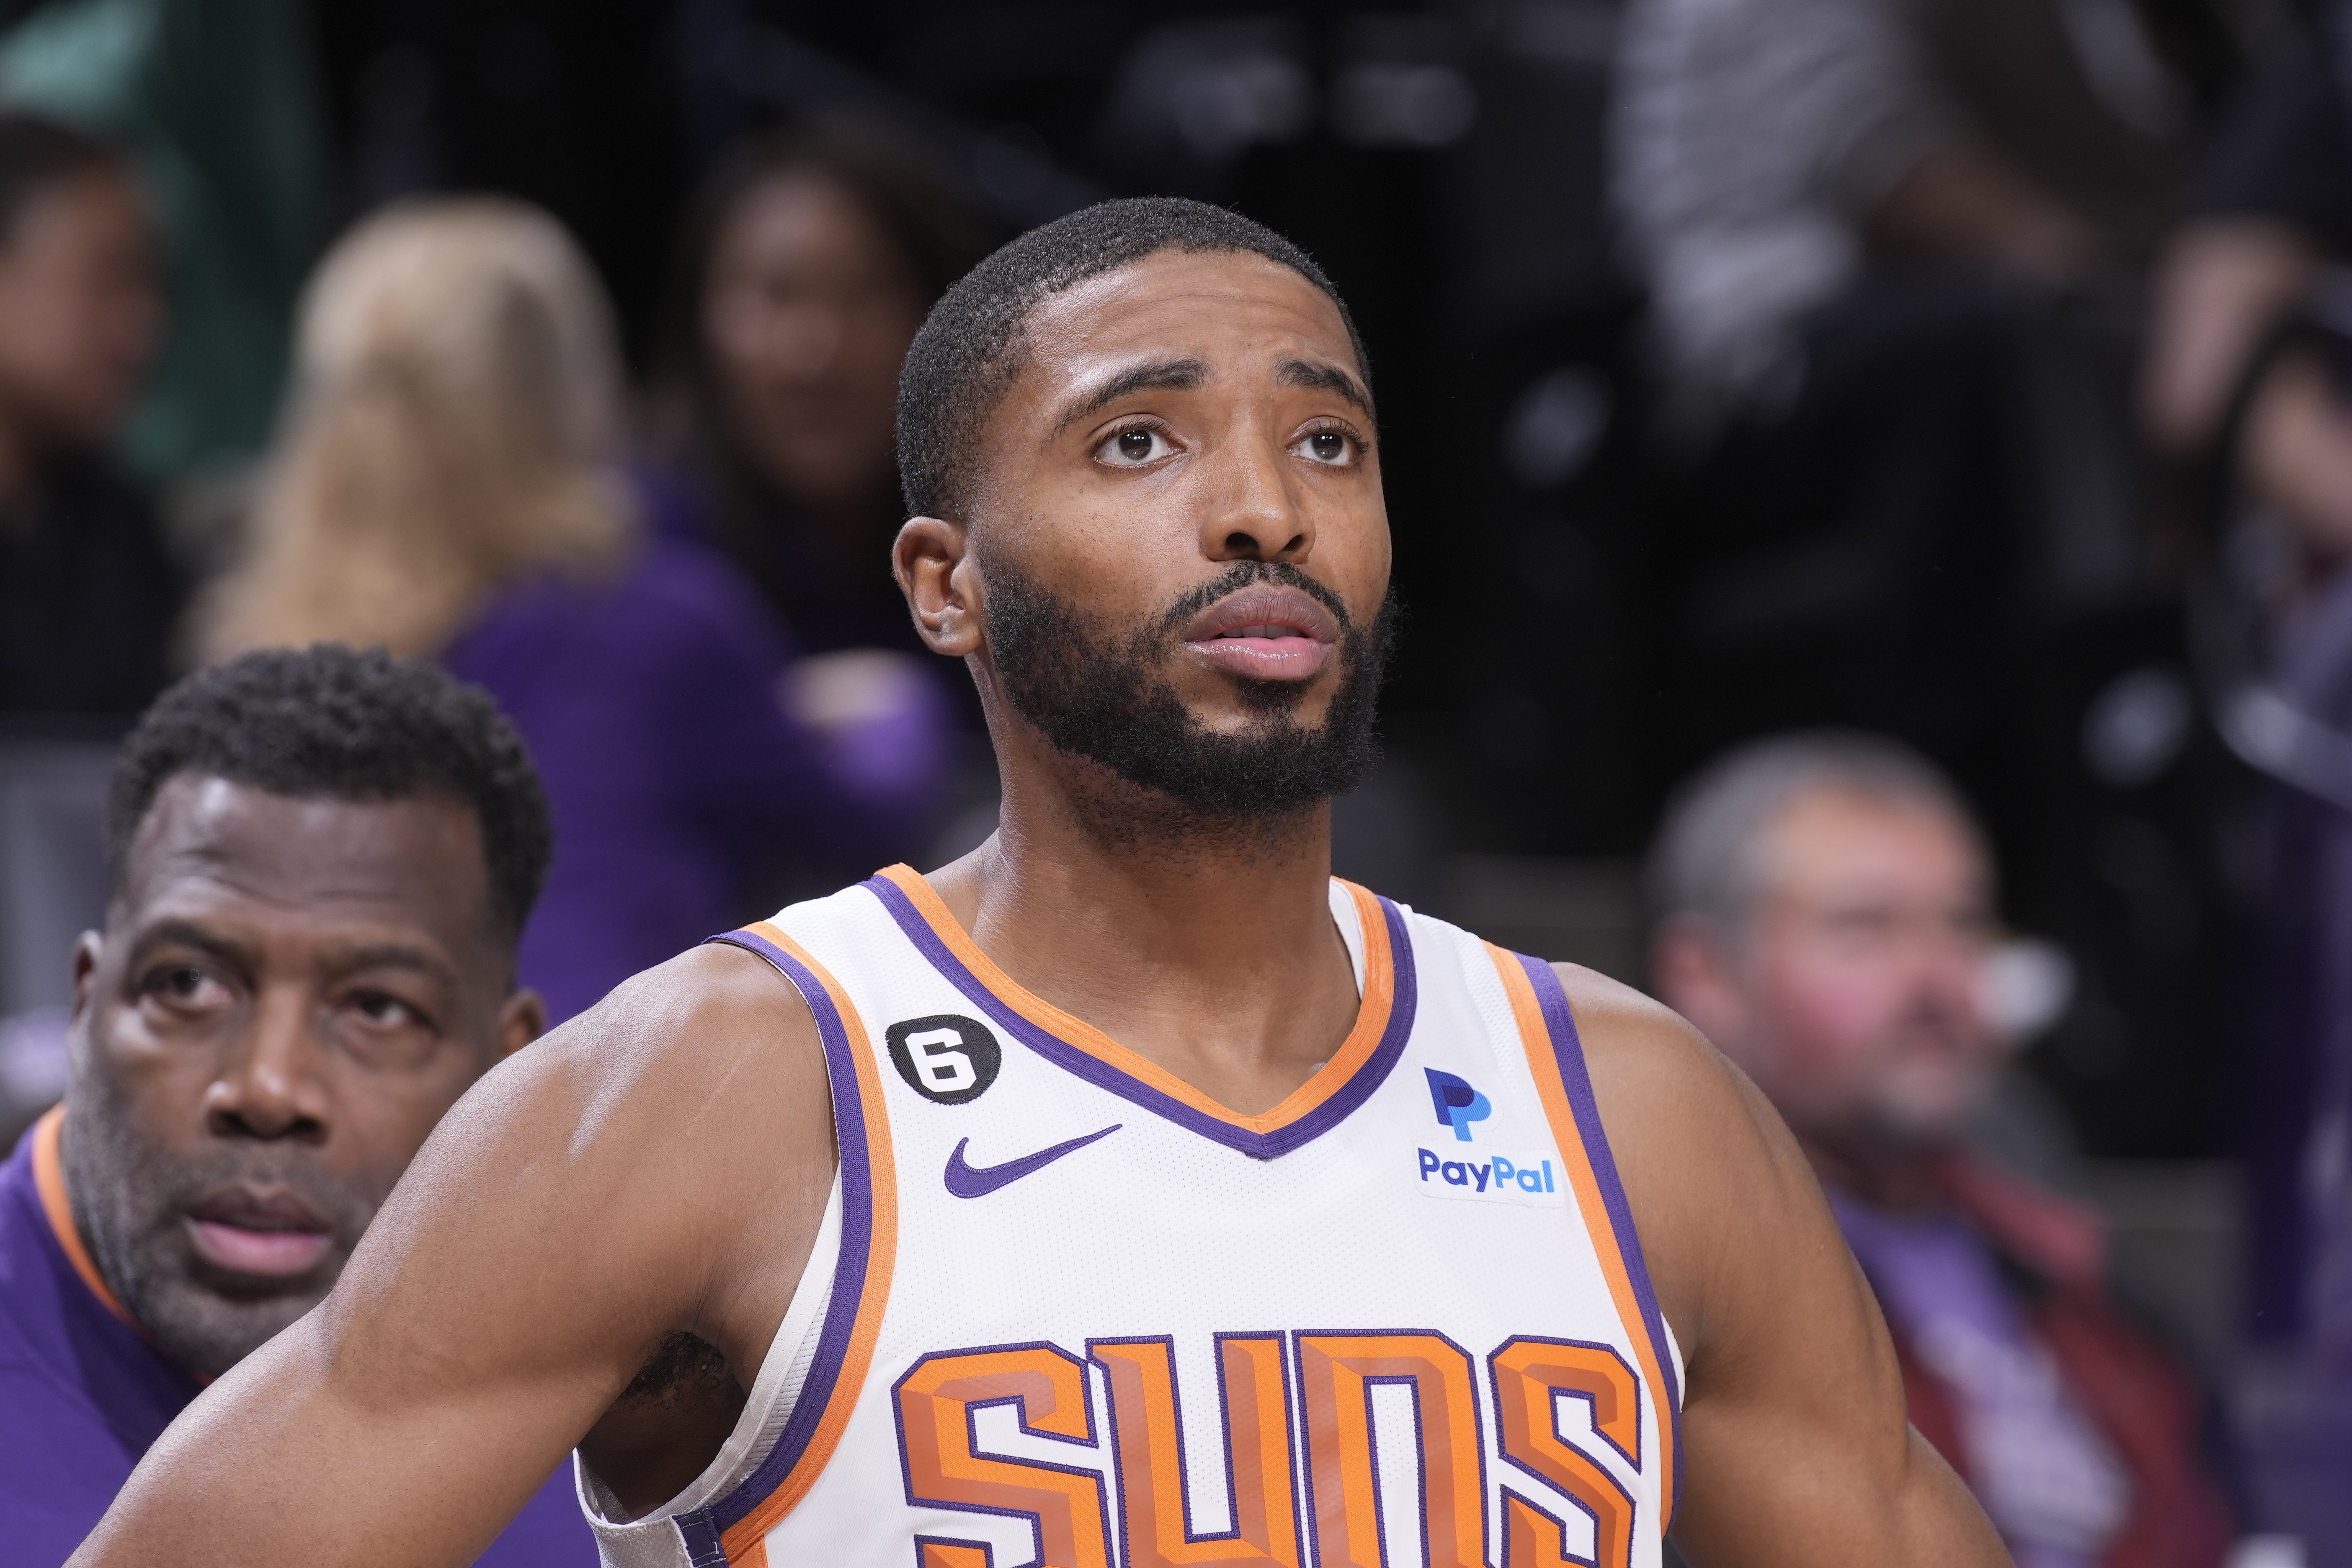 Phoenix Suns v Sacramento Kings